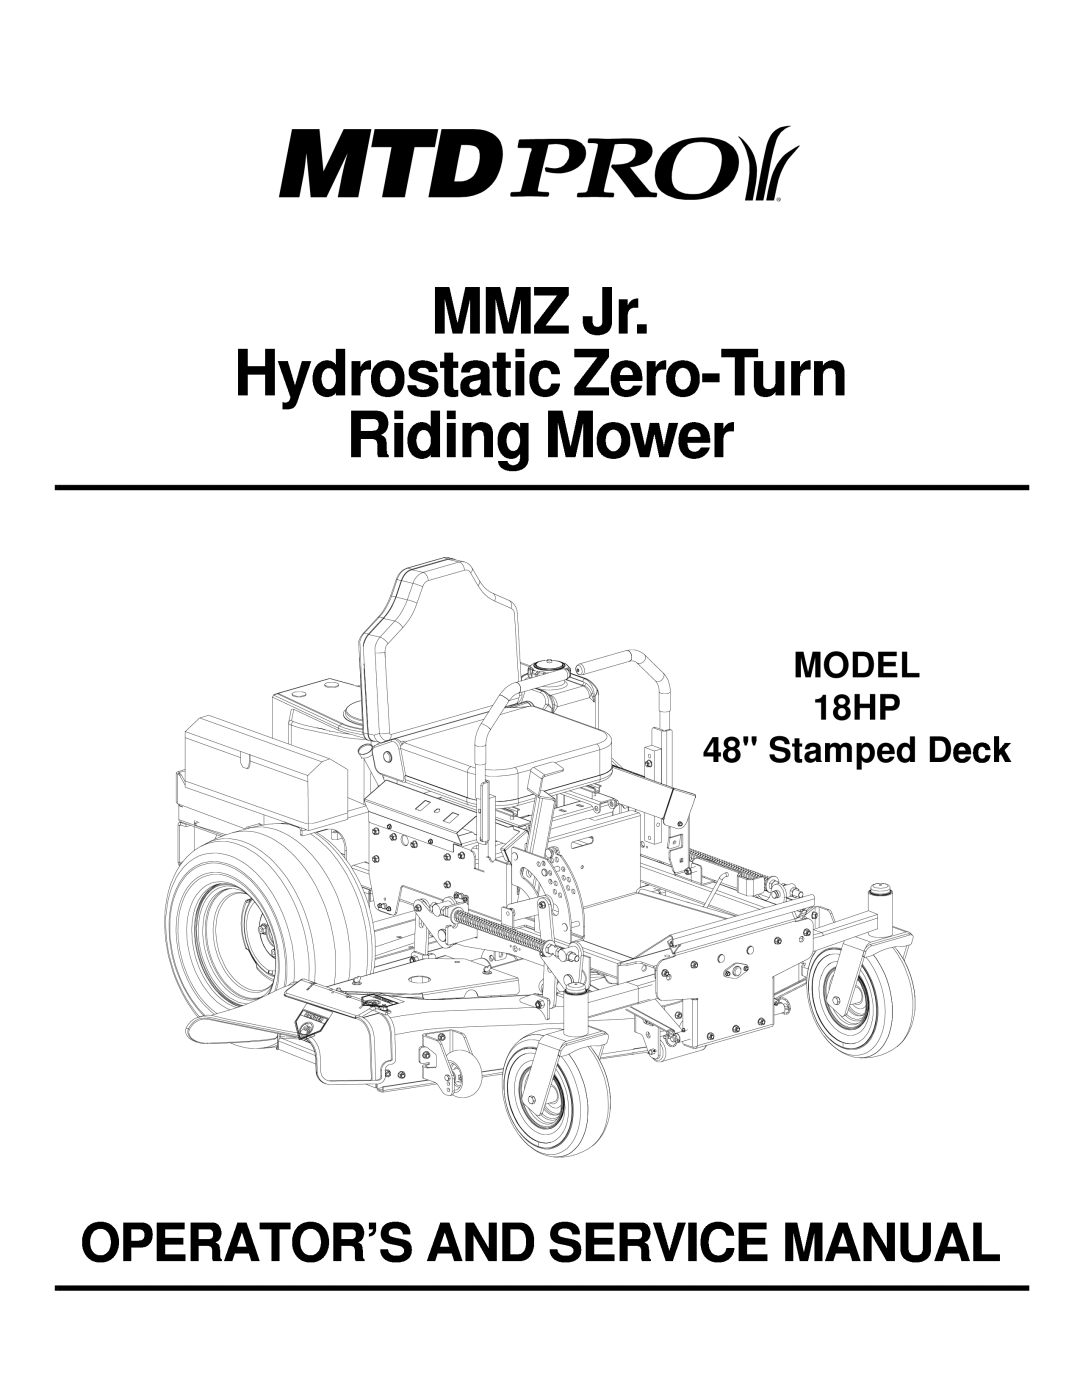 MTD 18HP service manual MMZ Jr Hydrostatic Zero-Turn Riding Mower, Operator’S And Service Manual 